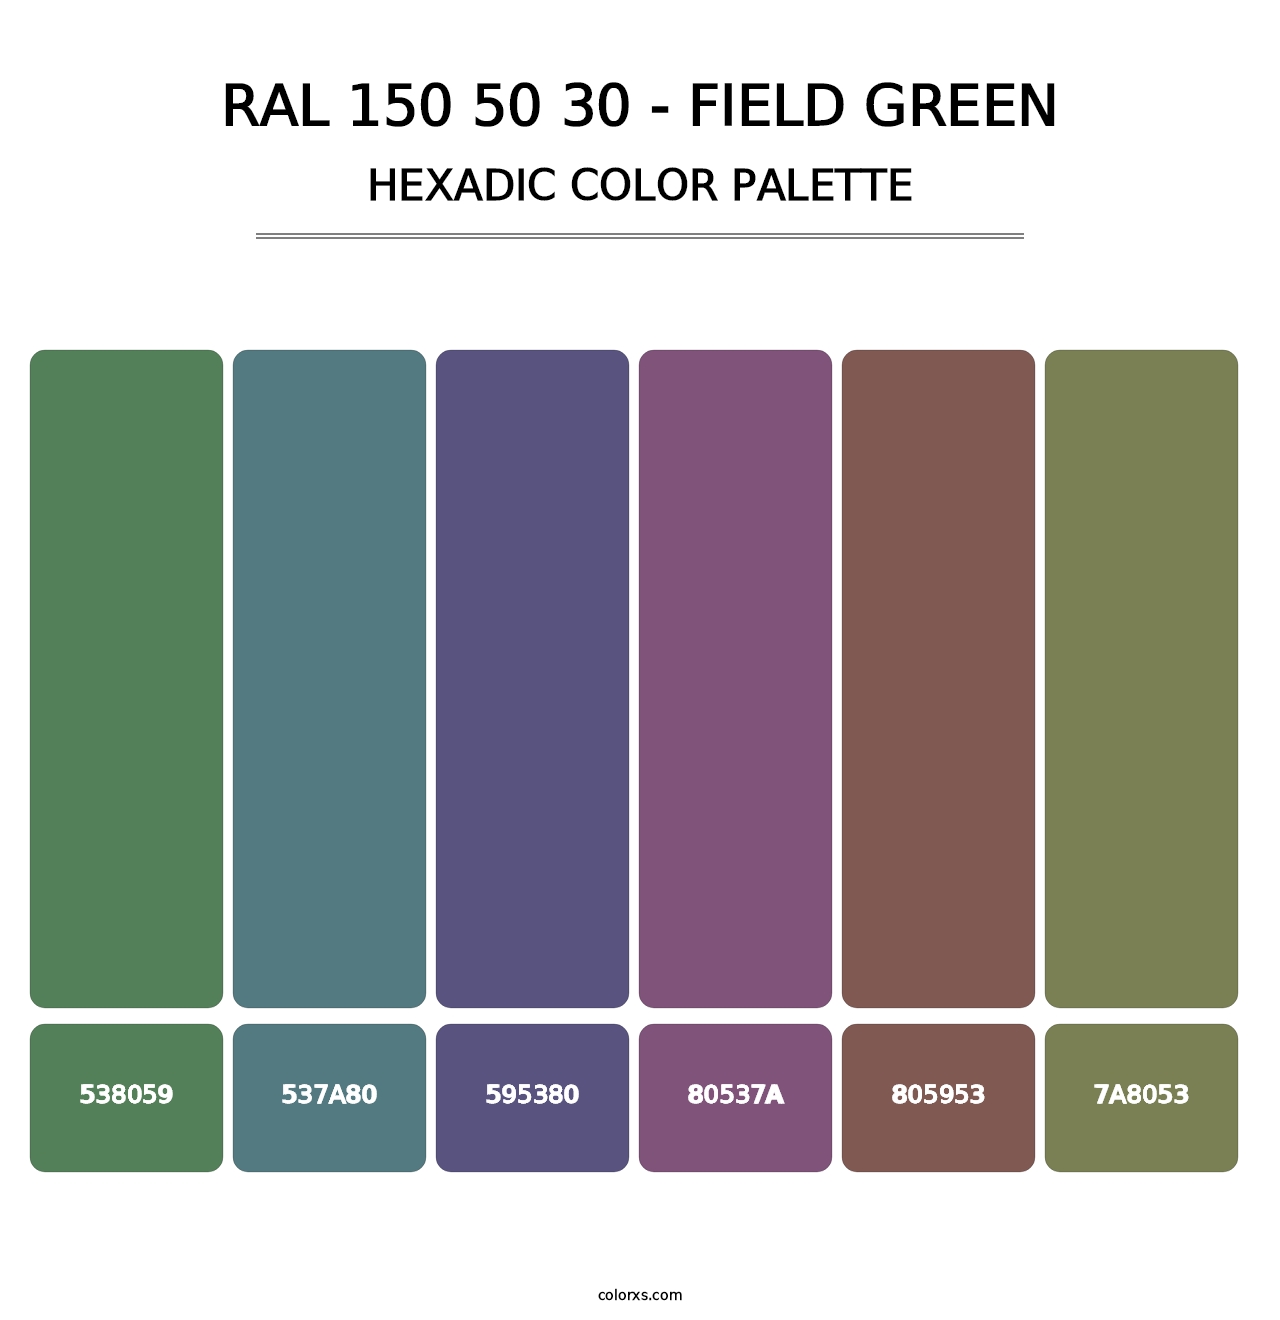 RAL 150 50 30 - Field Green - Hexadic Color Palette